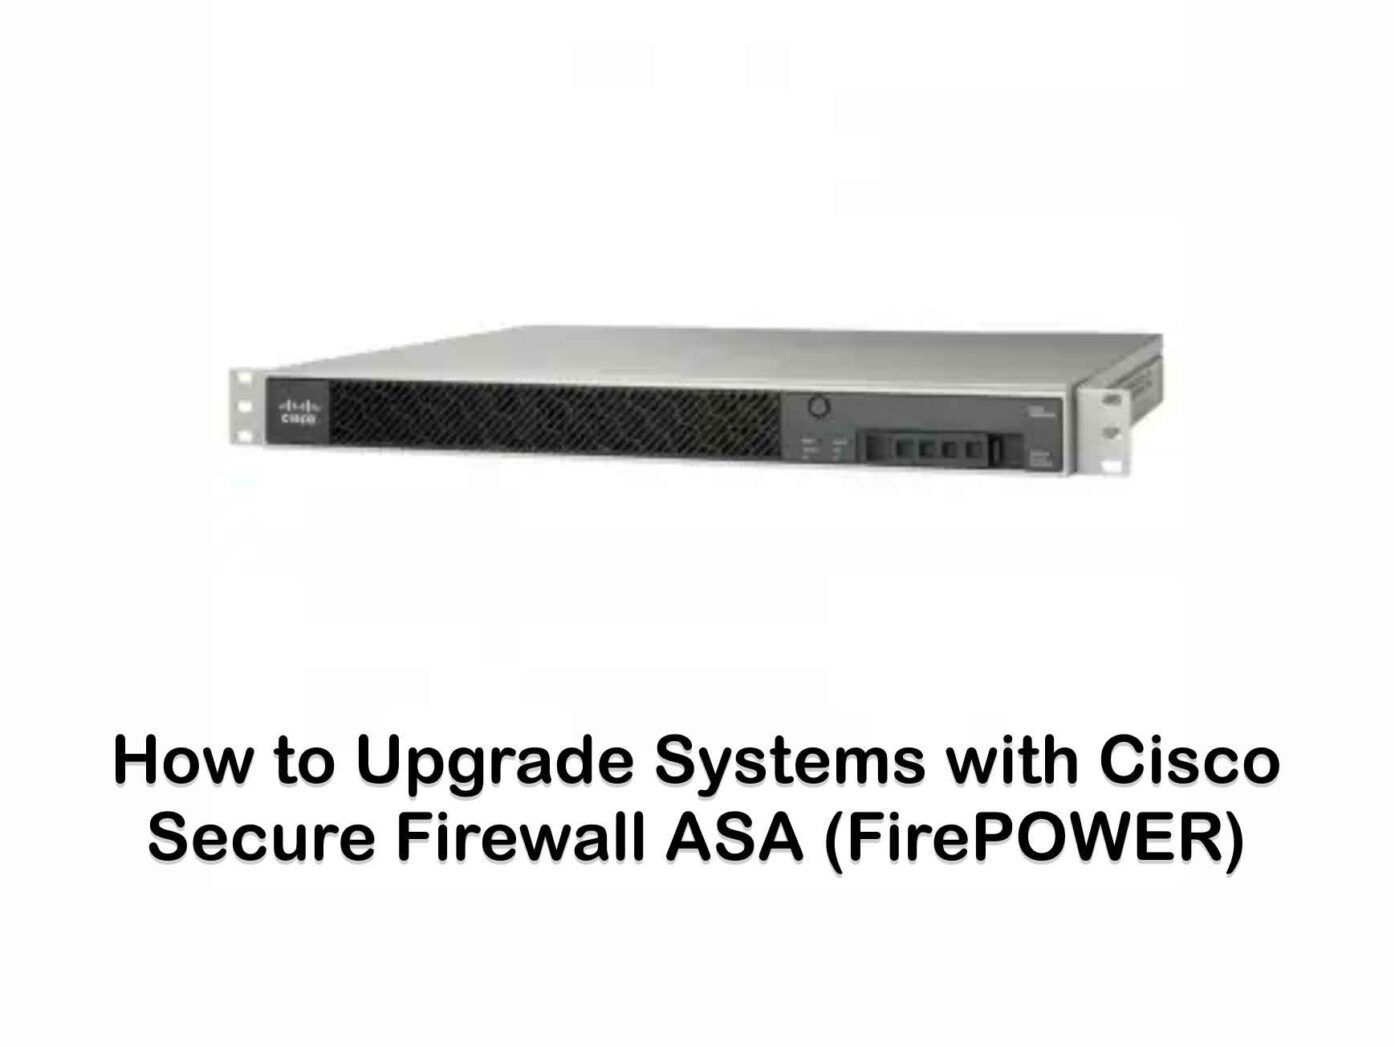 Cisco Secure Firewall ASA